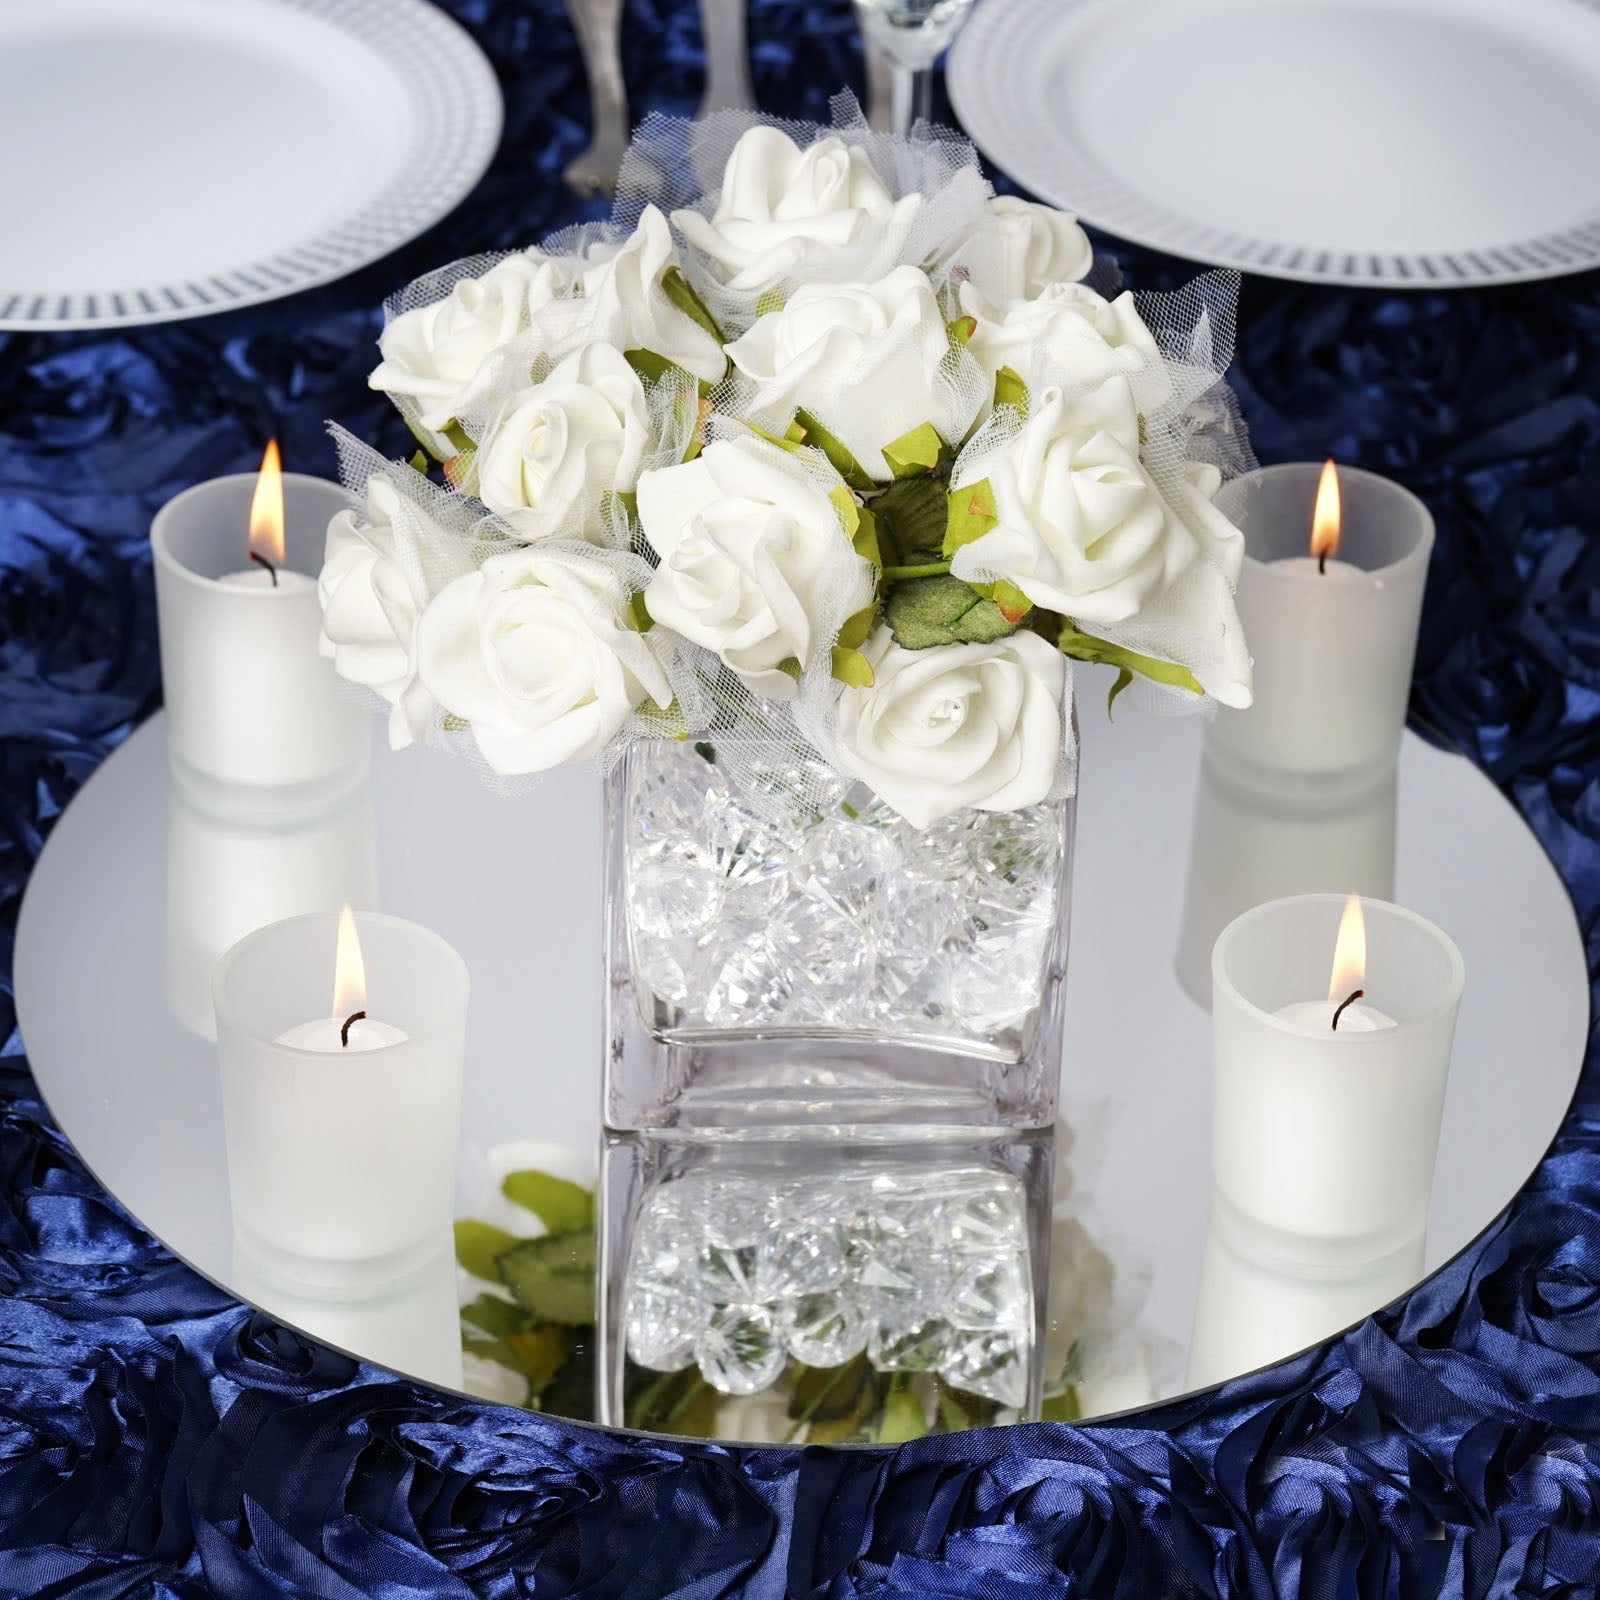 Efavormart 12 Square Glass Mirror Wedding Party Table Decorations  Centerpieces - 4 PCS